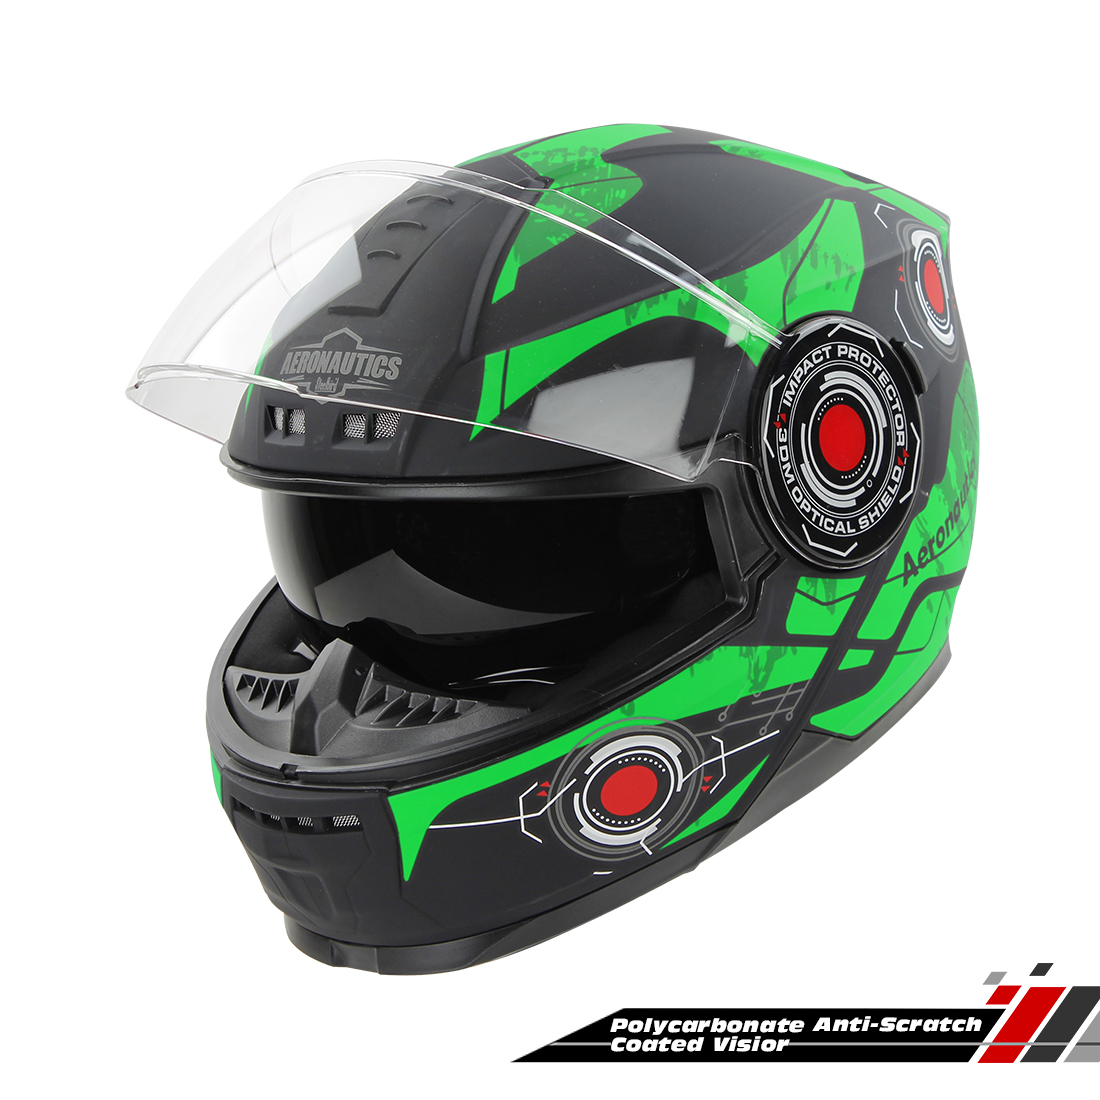 Steelbird SBH-40 Cyber ISI Certified Full Face Graphic Helmet For Men And Women With Inner Sun Shield (Matt Black Green)